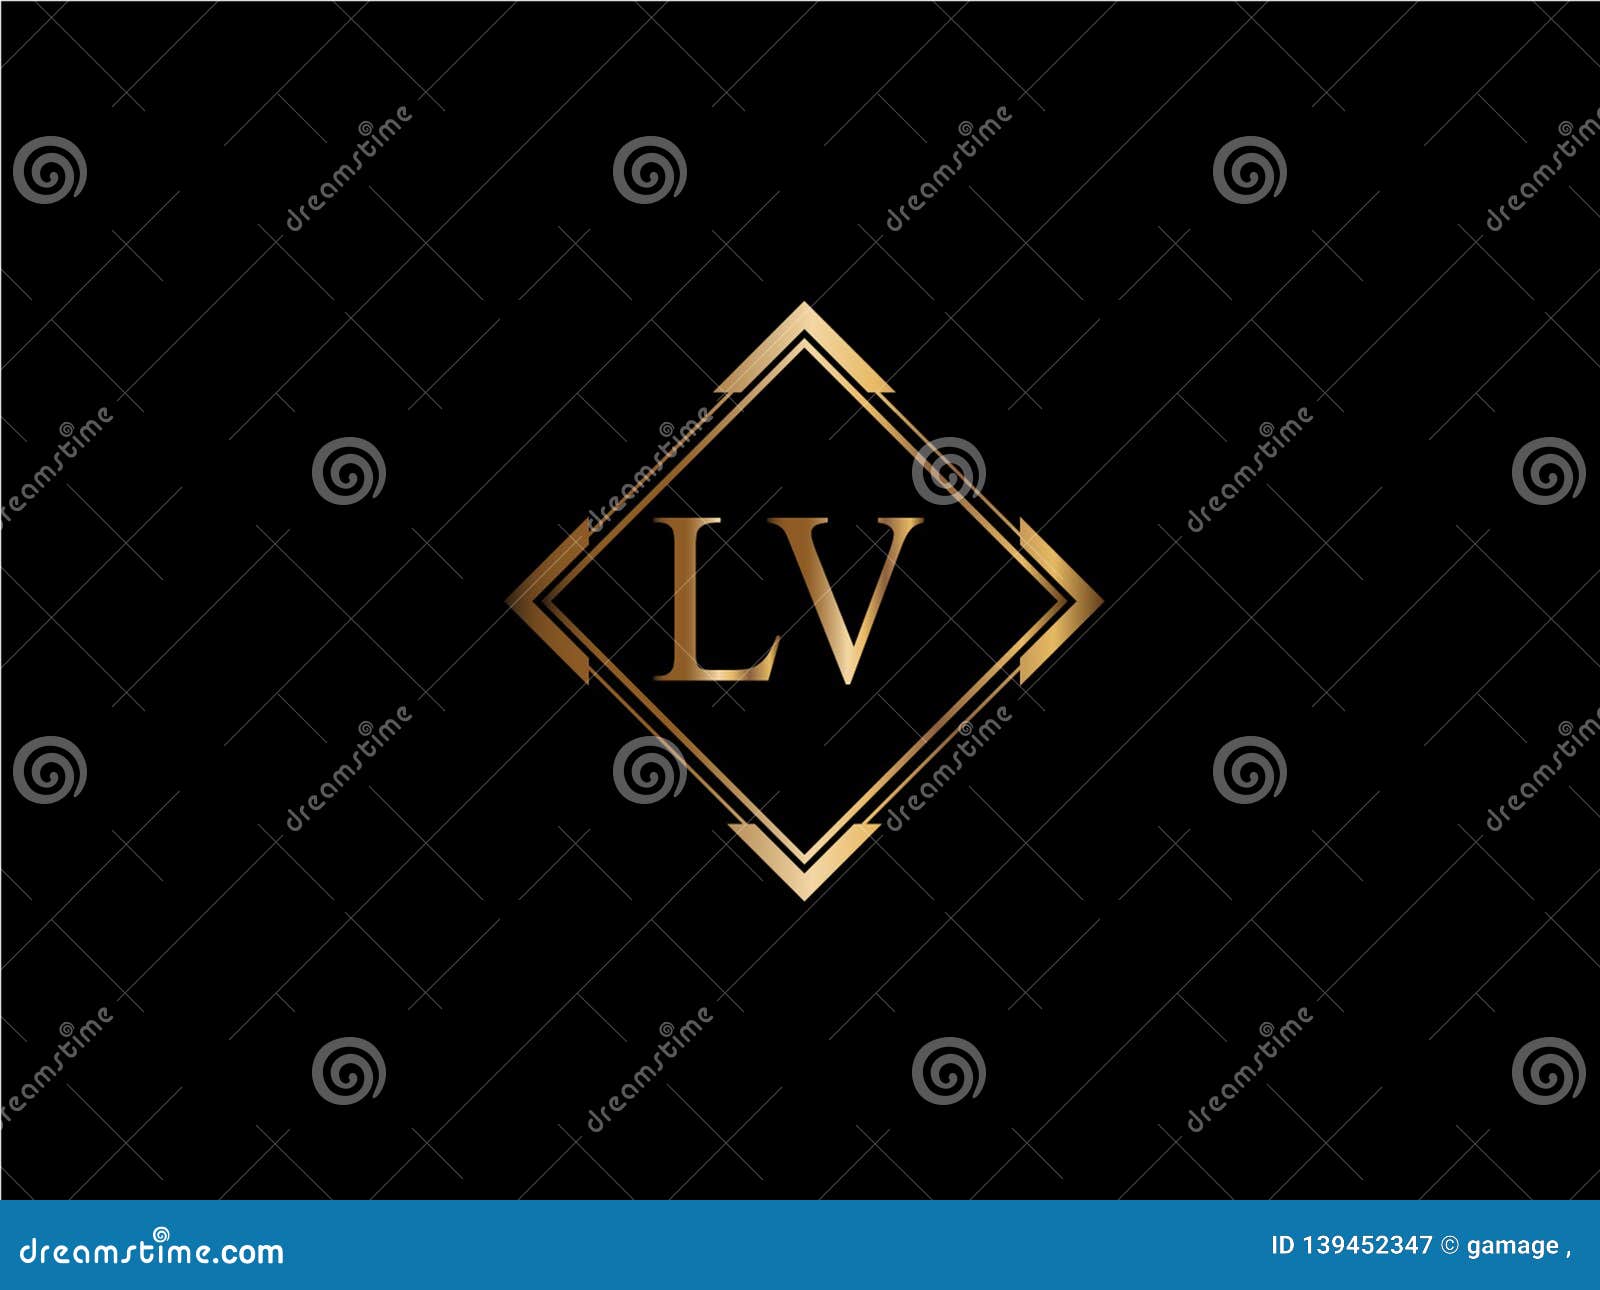 LV Initial Diamond Shape Gold Color Later Logo Design Stock Vector -  Illustration of deisign, line: 139452347